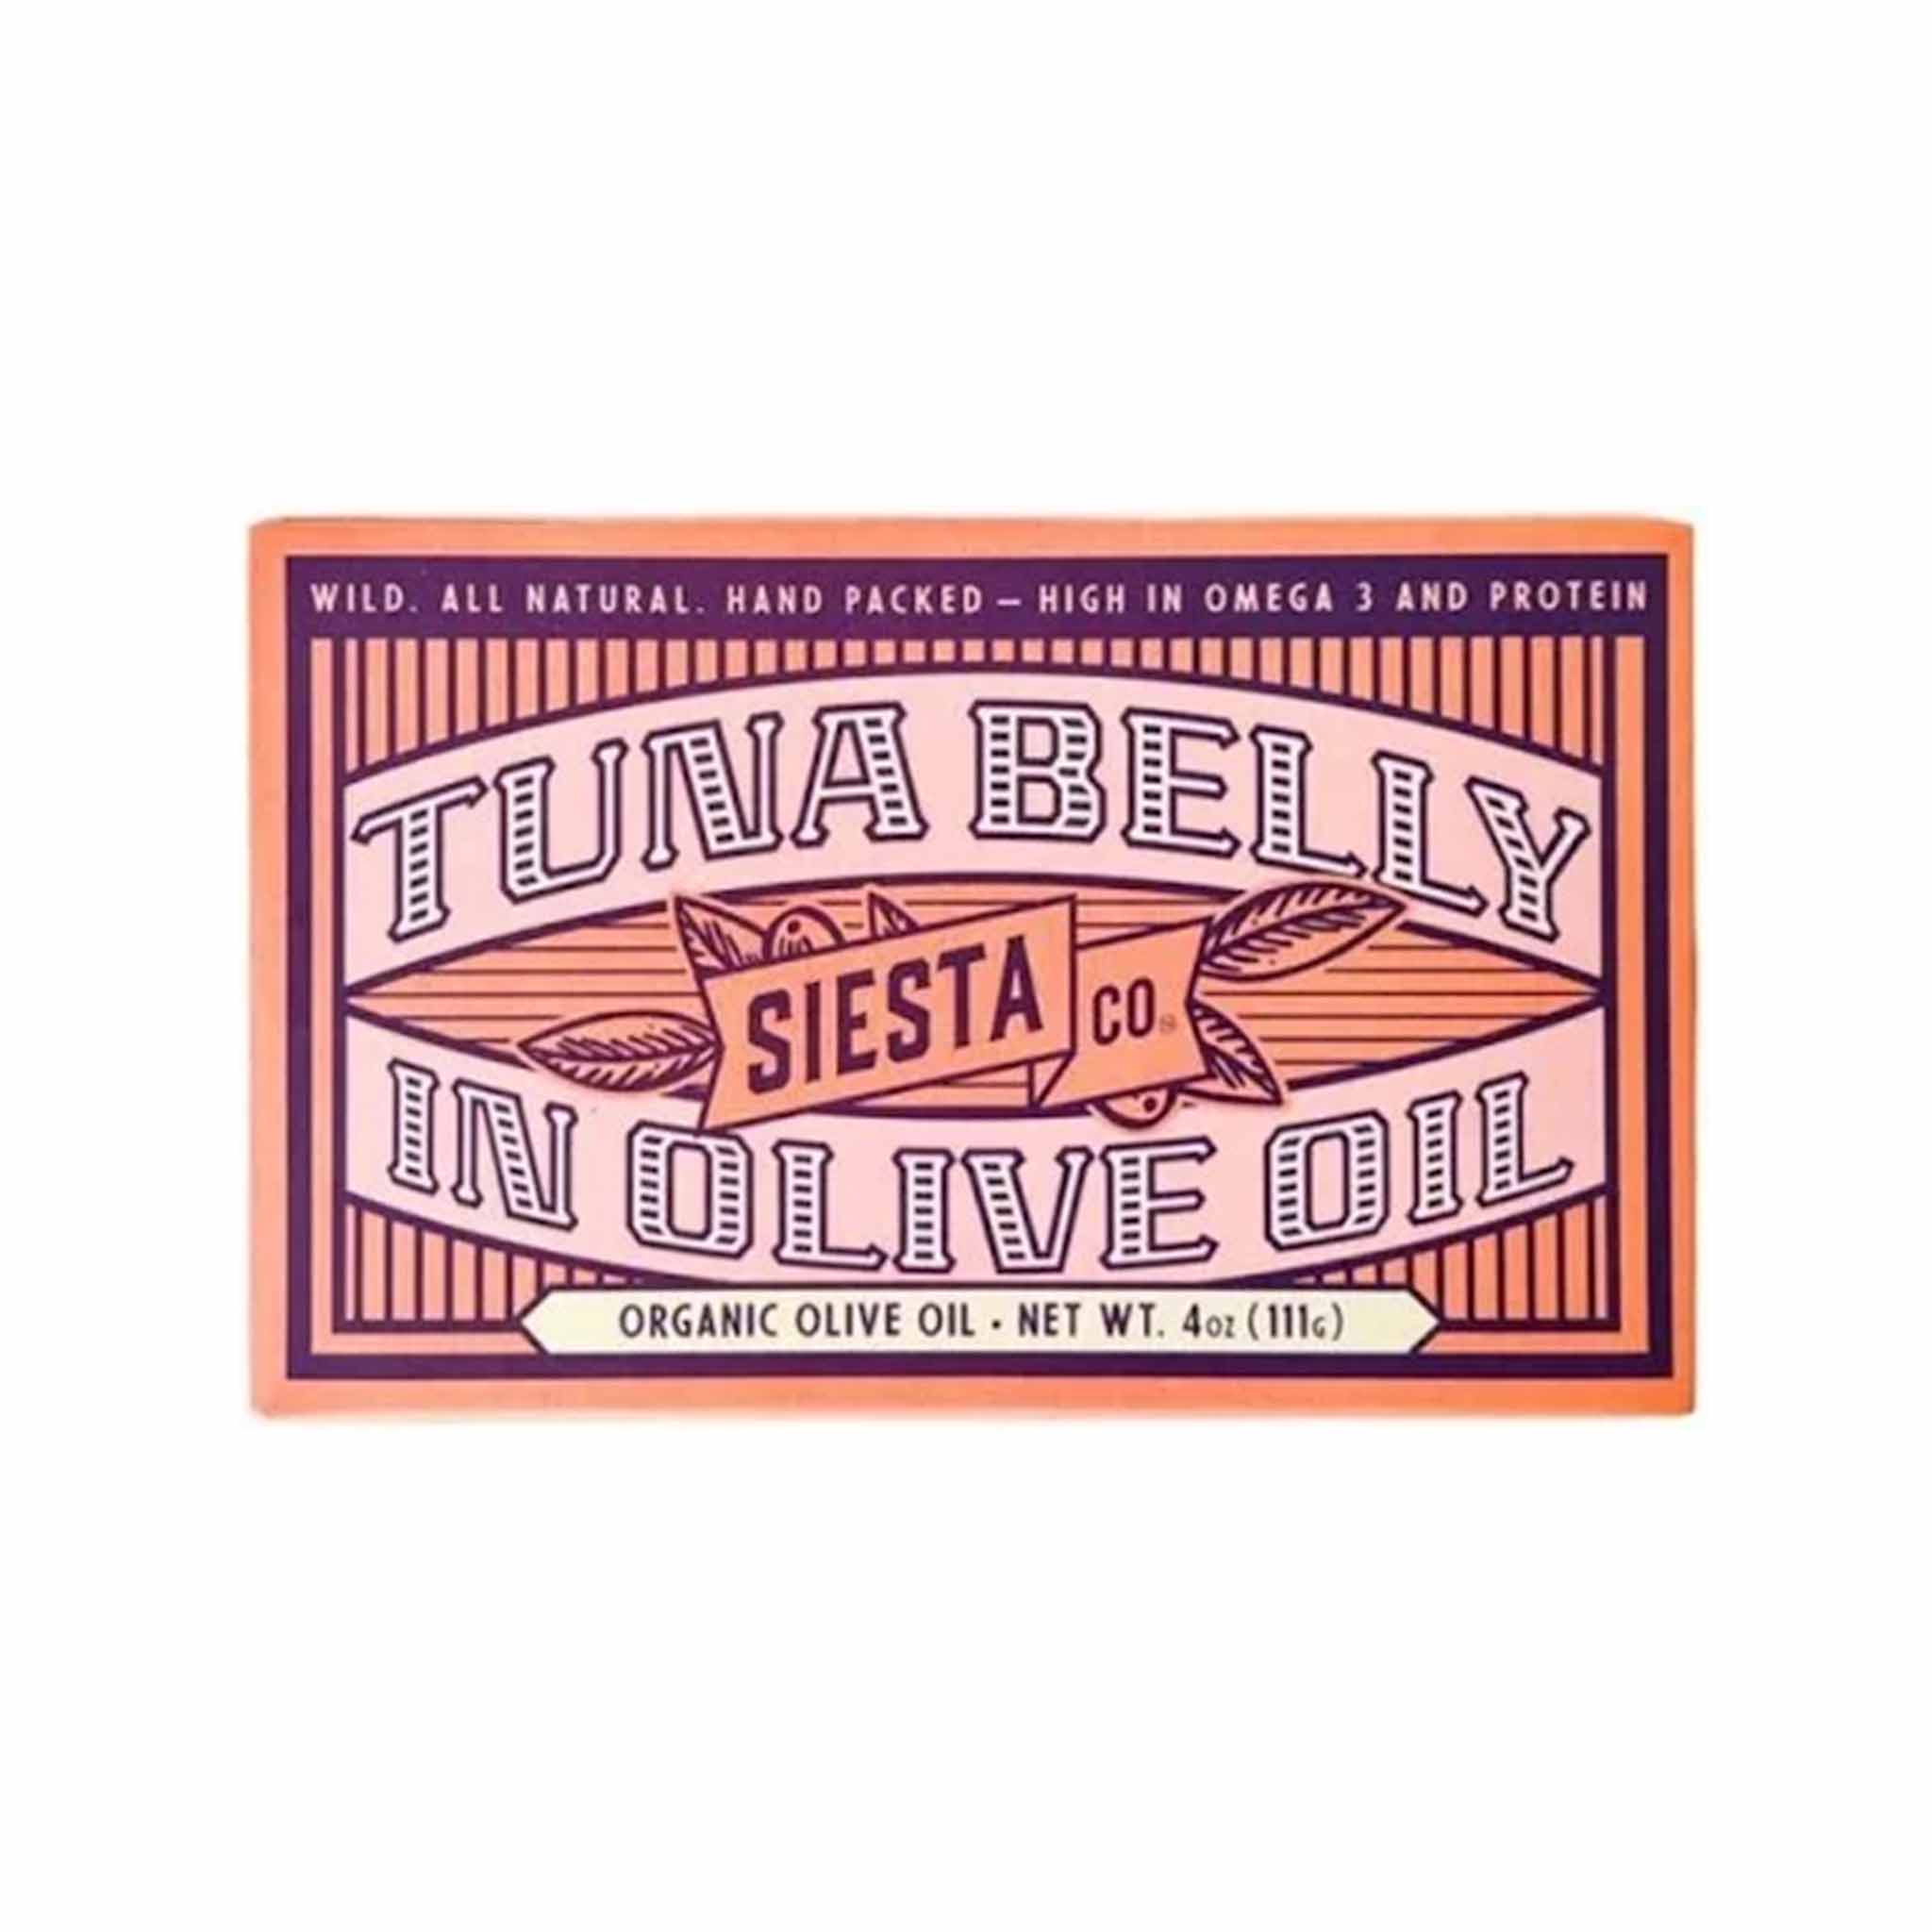 Siesta Co. Tuna Belly Extra Virgin Olive Oil